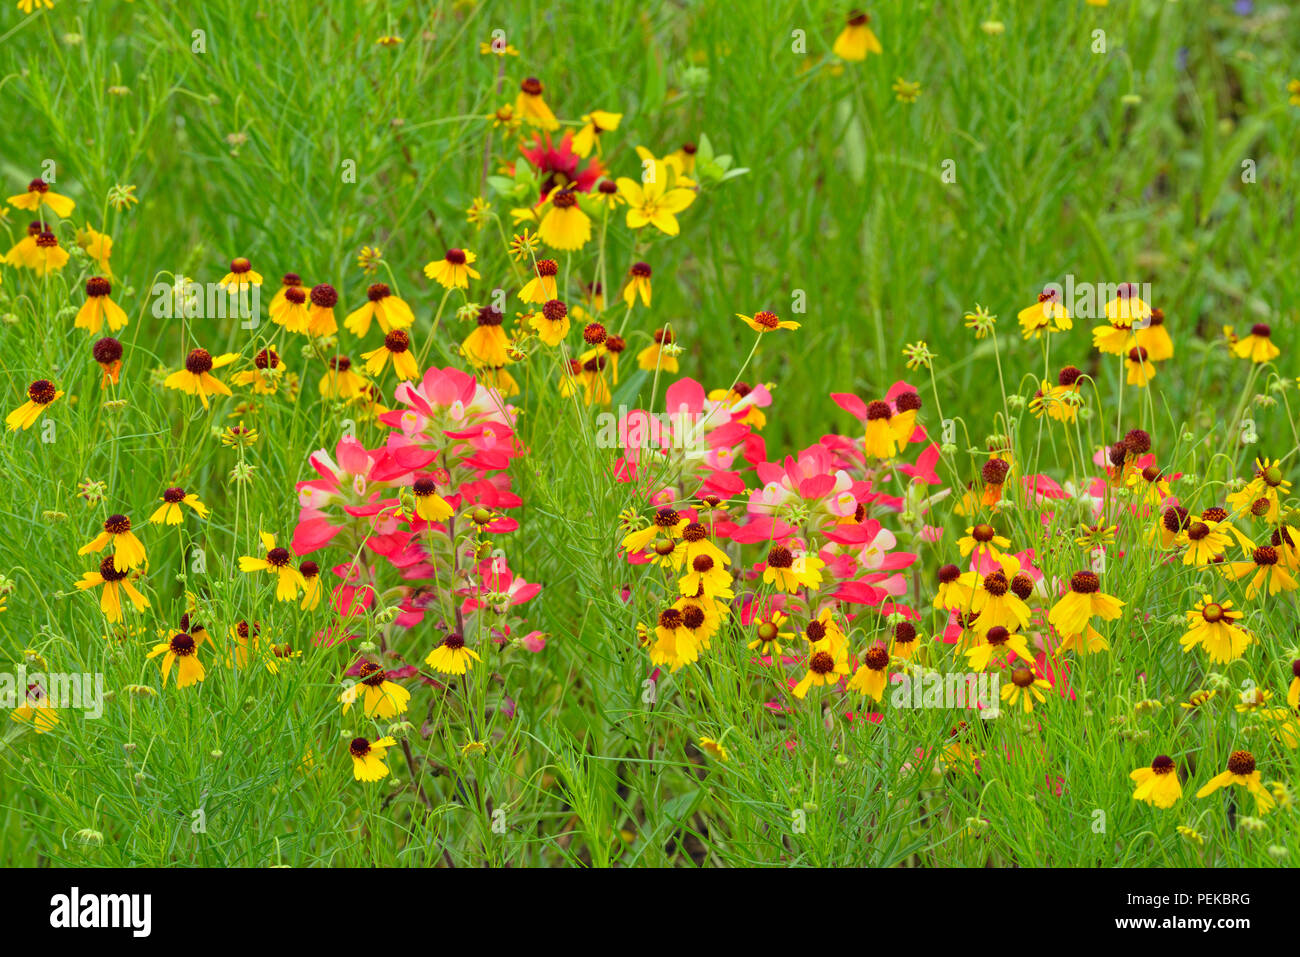 Roadside wildflowers in bloom featuring Texas paintbrush (Castilleja indivisa) and Brown bitterweed (Helenium badium), Llano County, Texas, USA Stock Photo